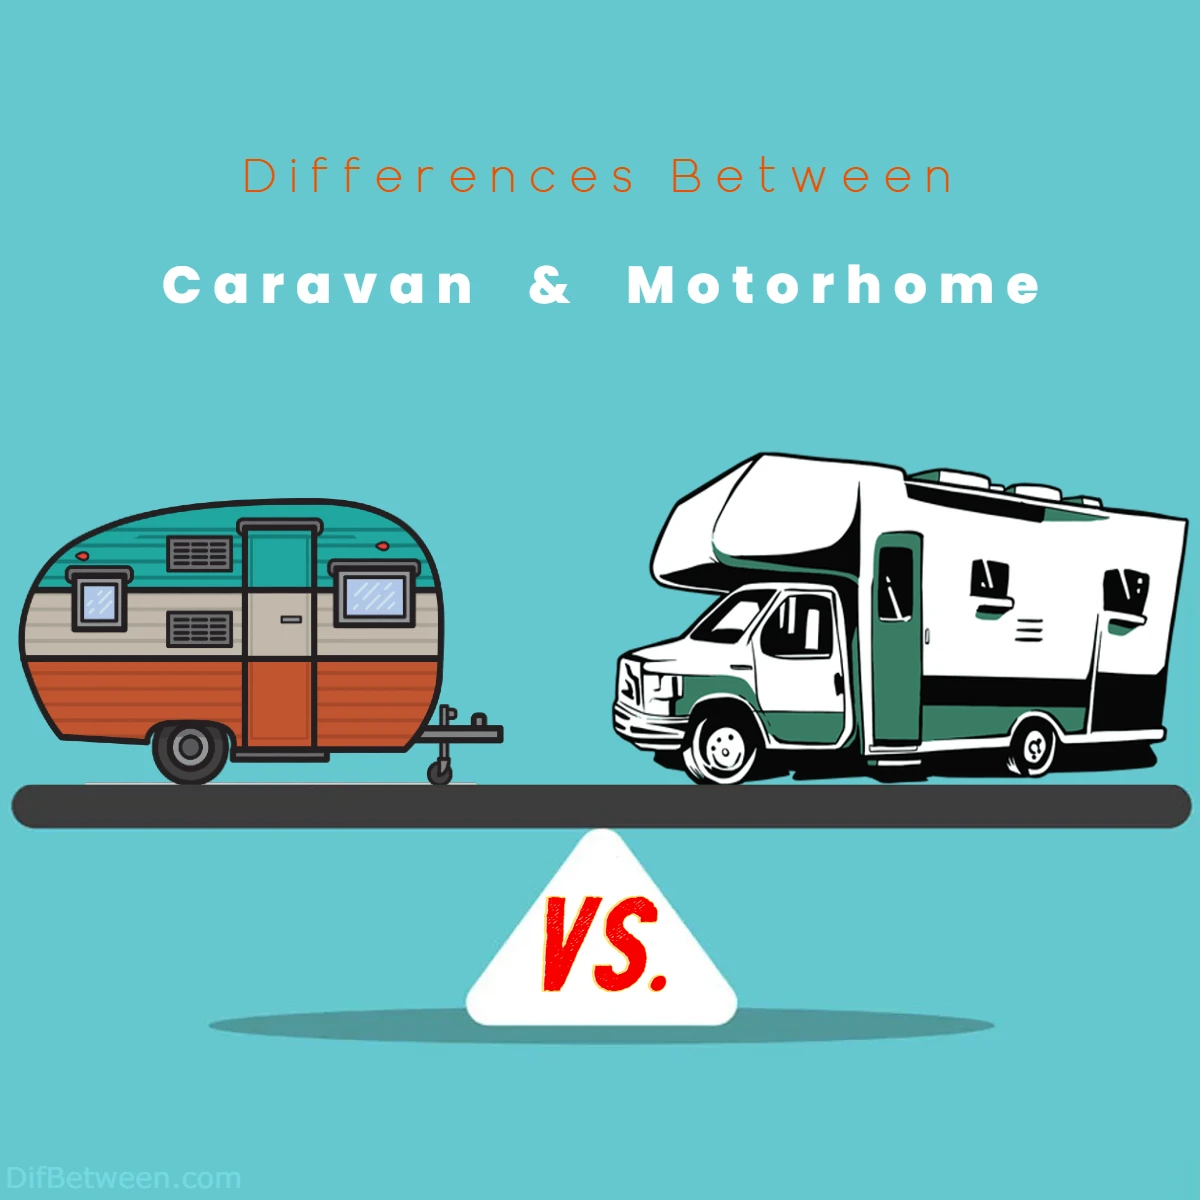 Differences Between Caravan vs Motorhome